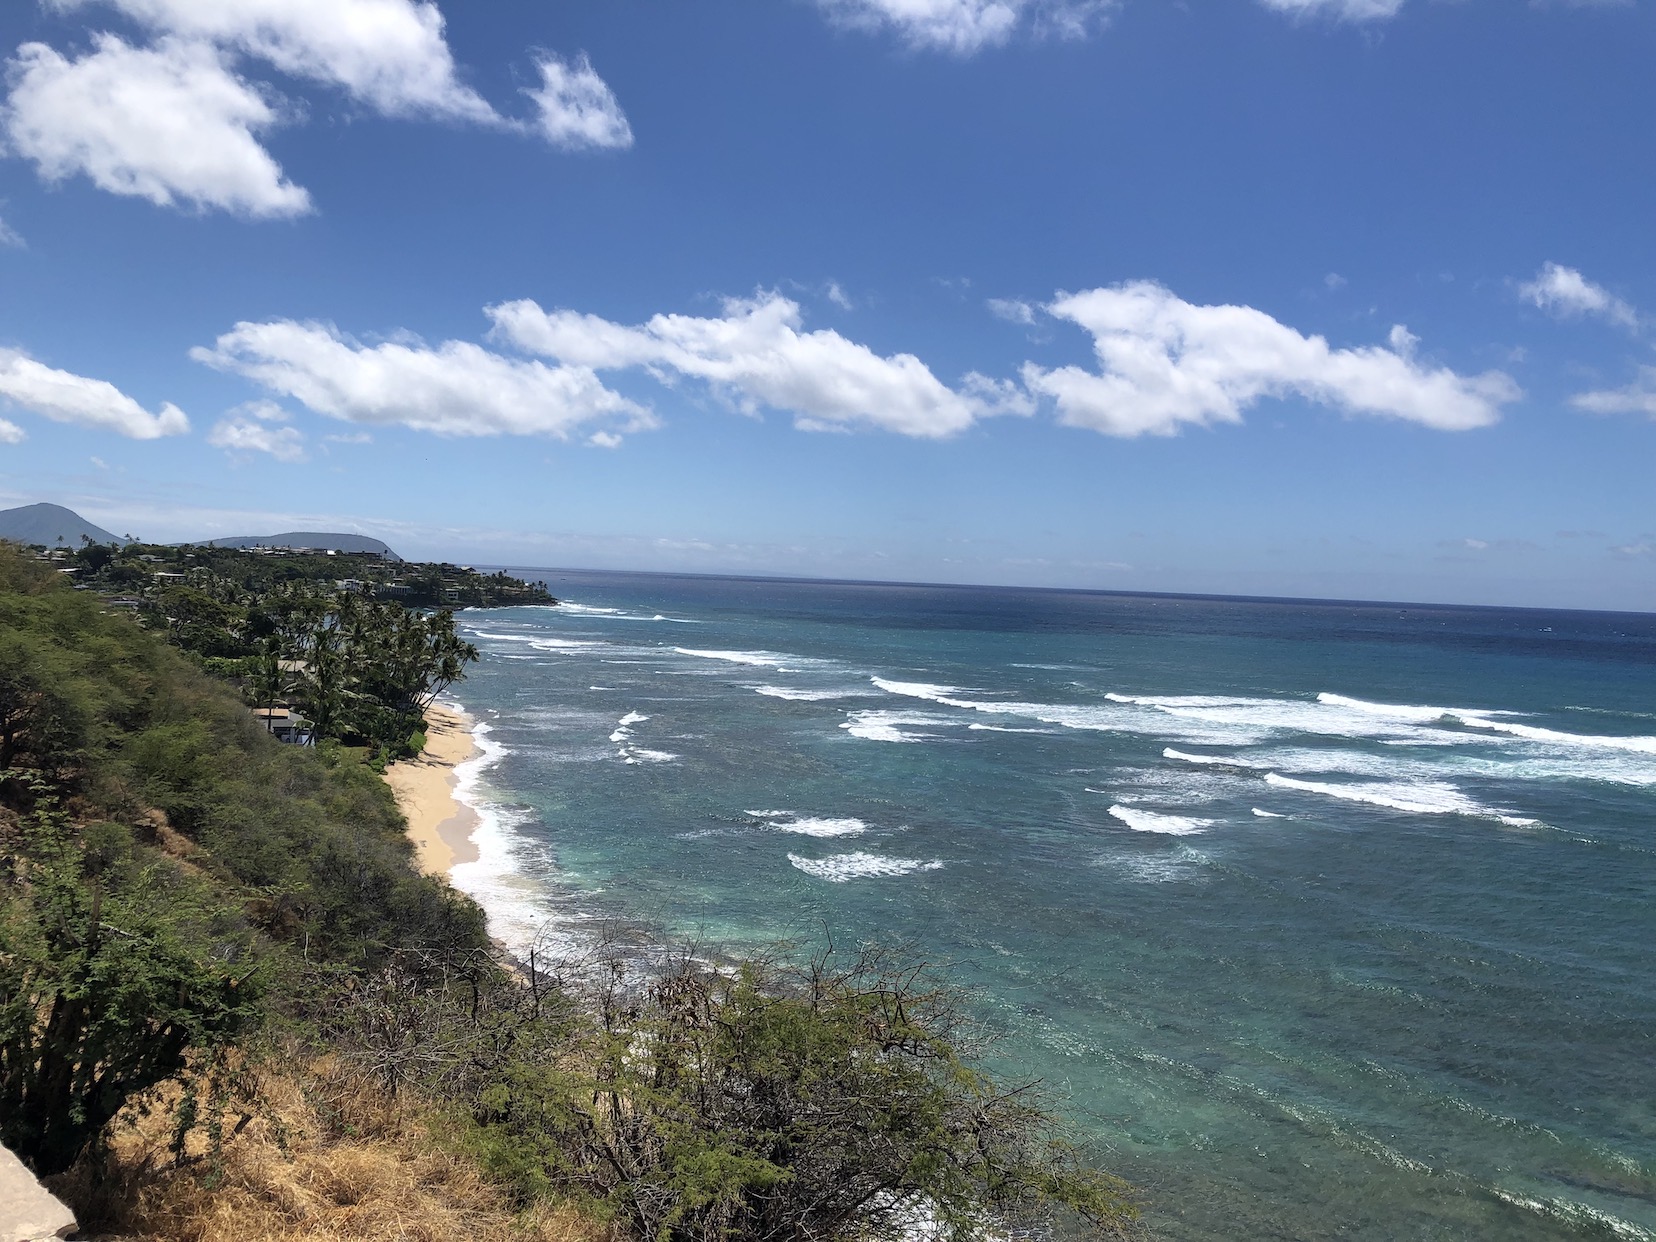 View from Diamond Head, looking towards Hawaii Kai.